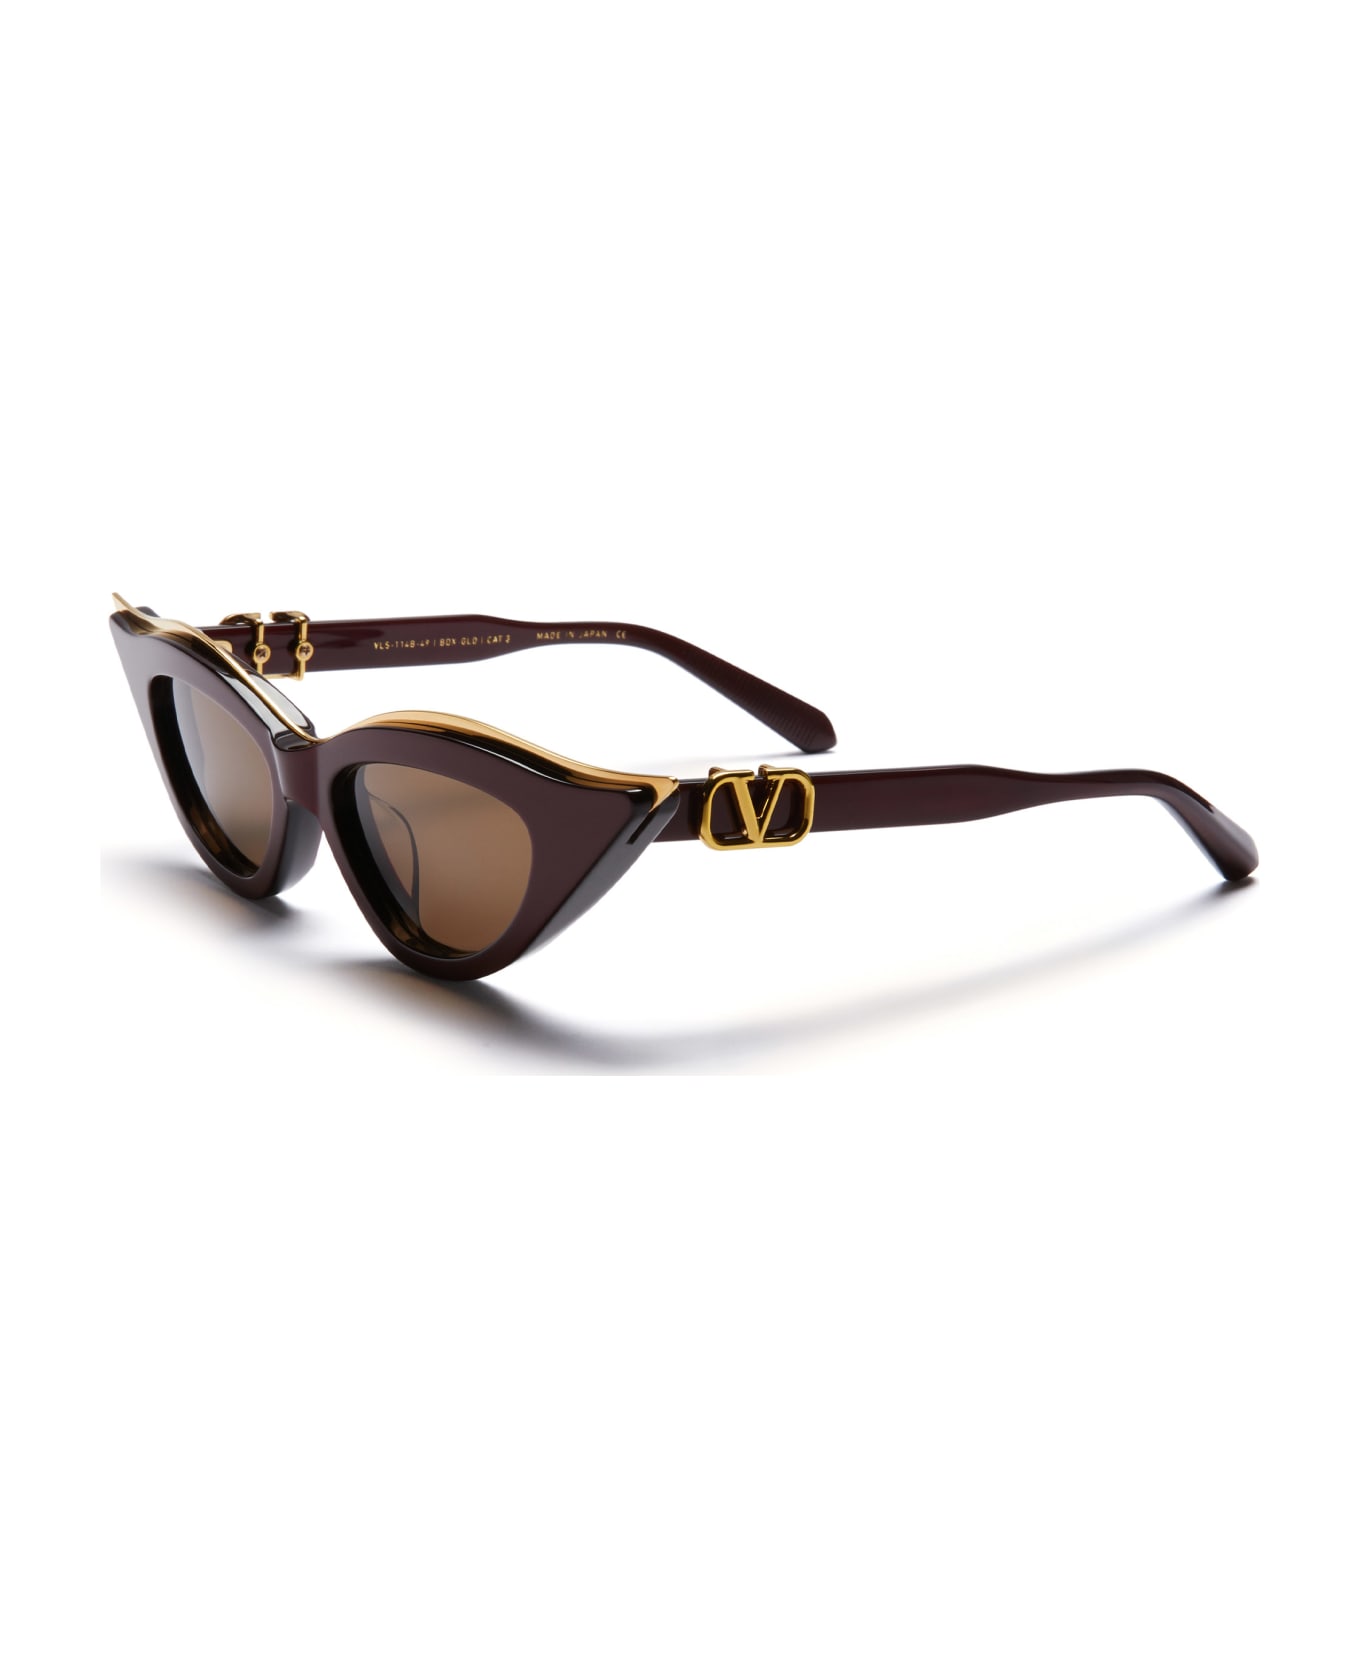 Valentino Eyewear V-goldcut Ii - Burgundy / Yellow Gold Sunglasses - burgundy